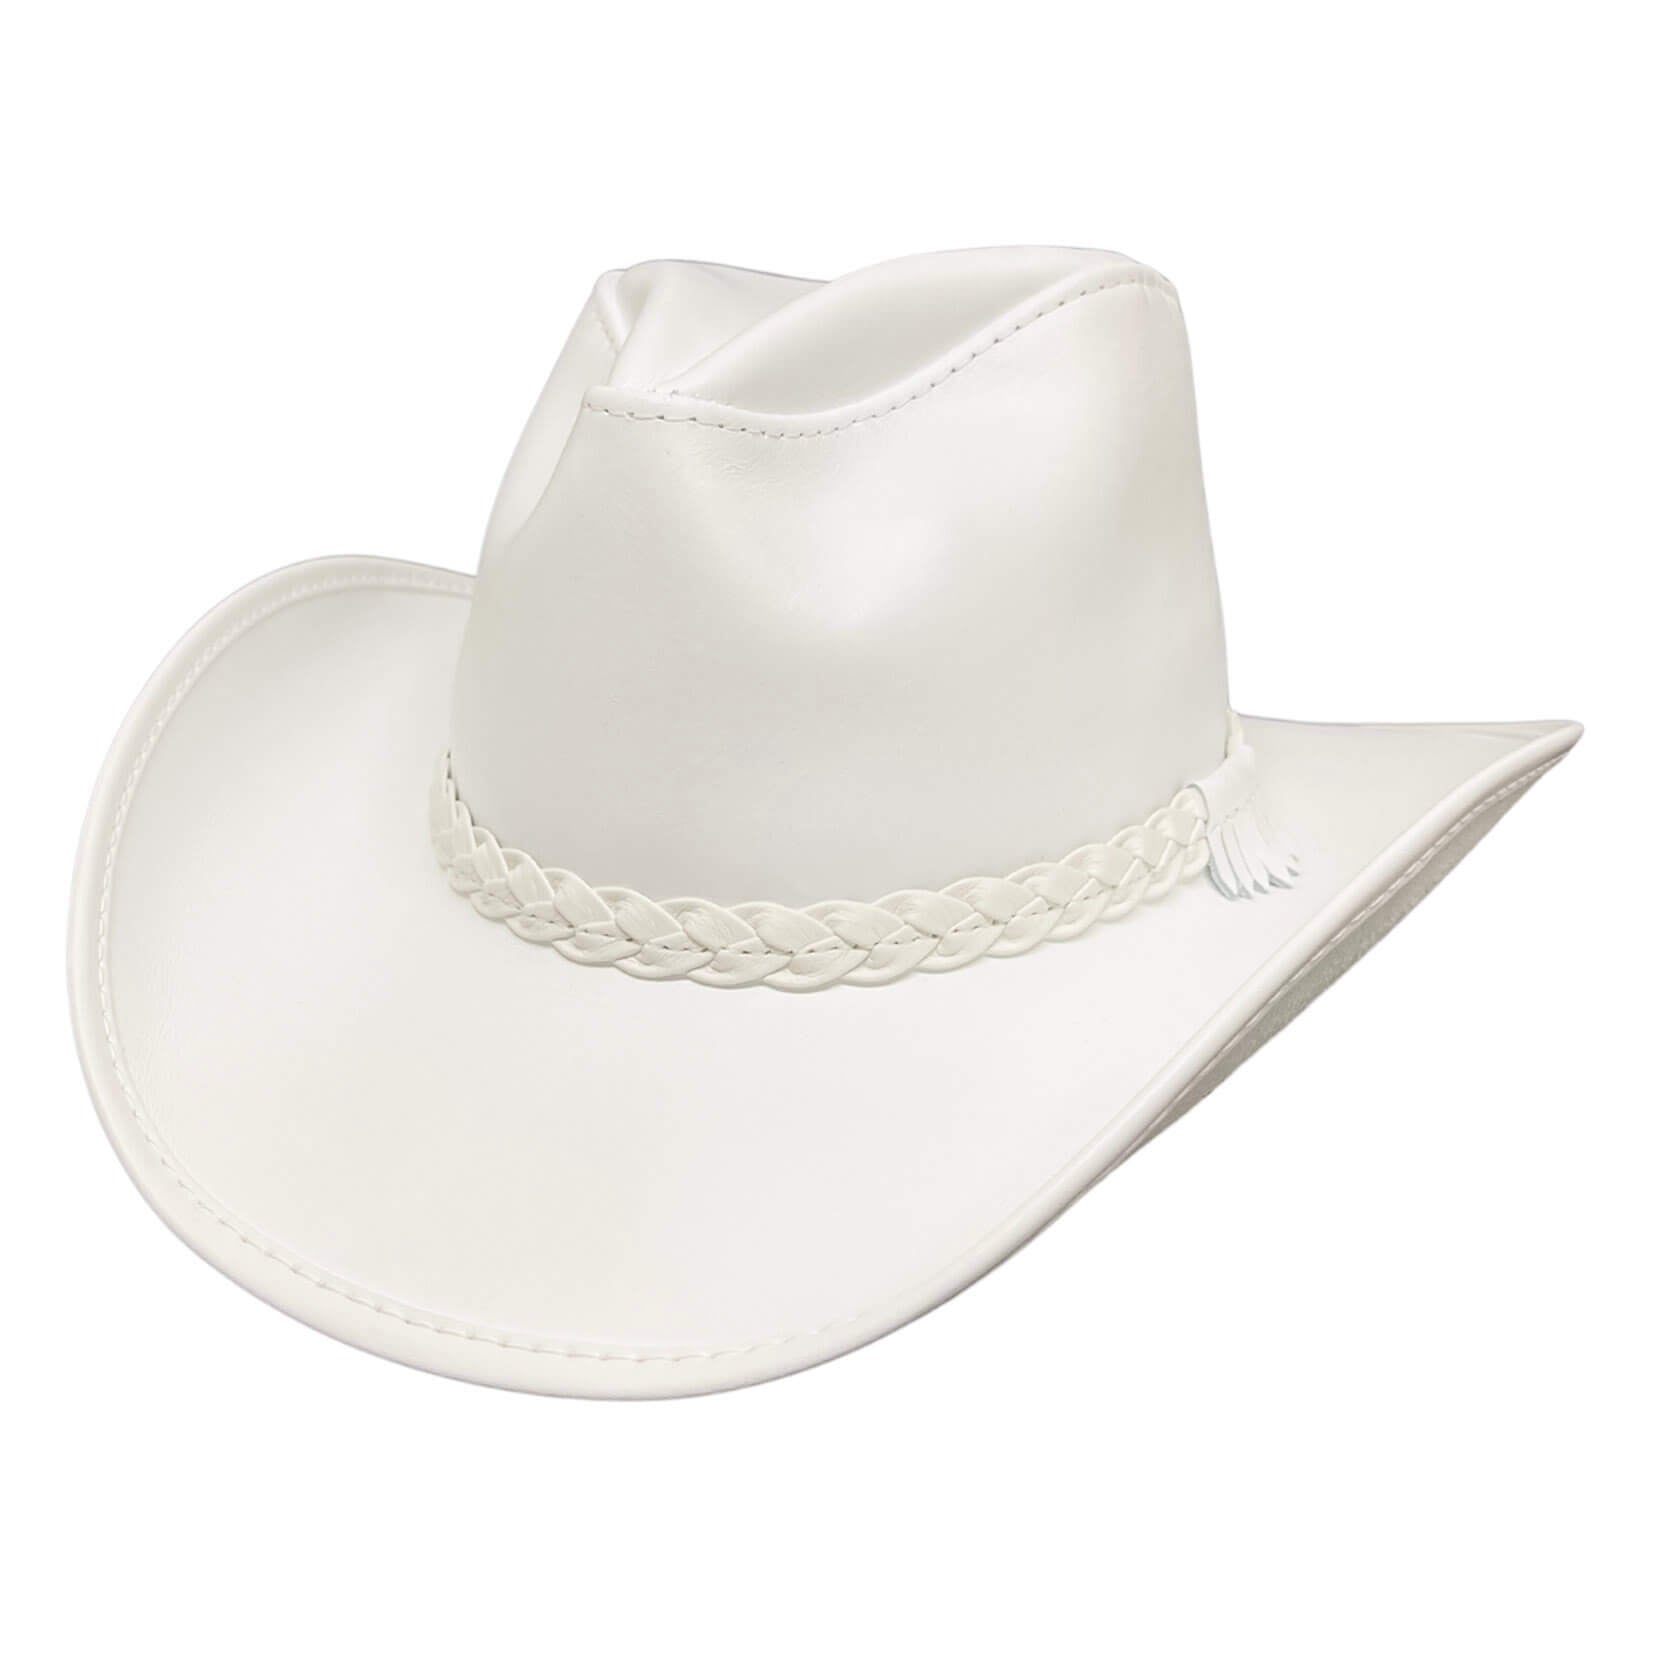 Blizzard - White Leather Cowboy Hat